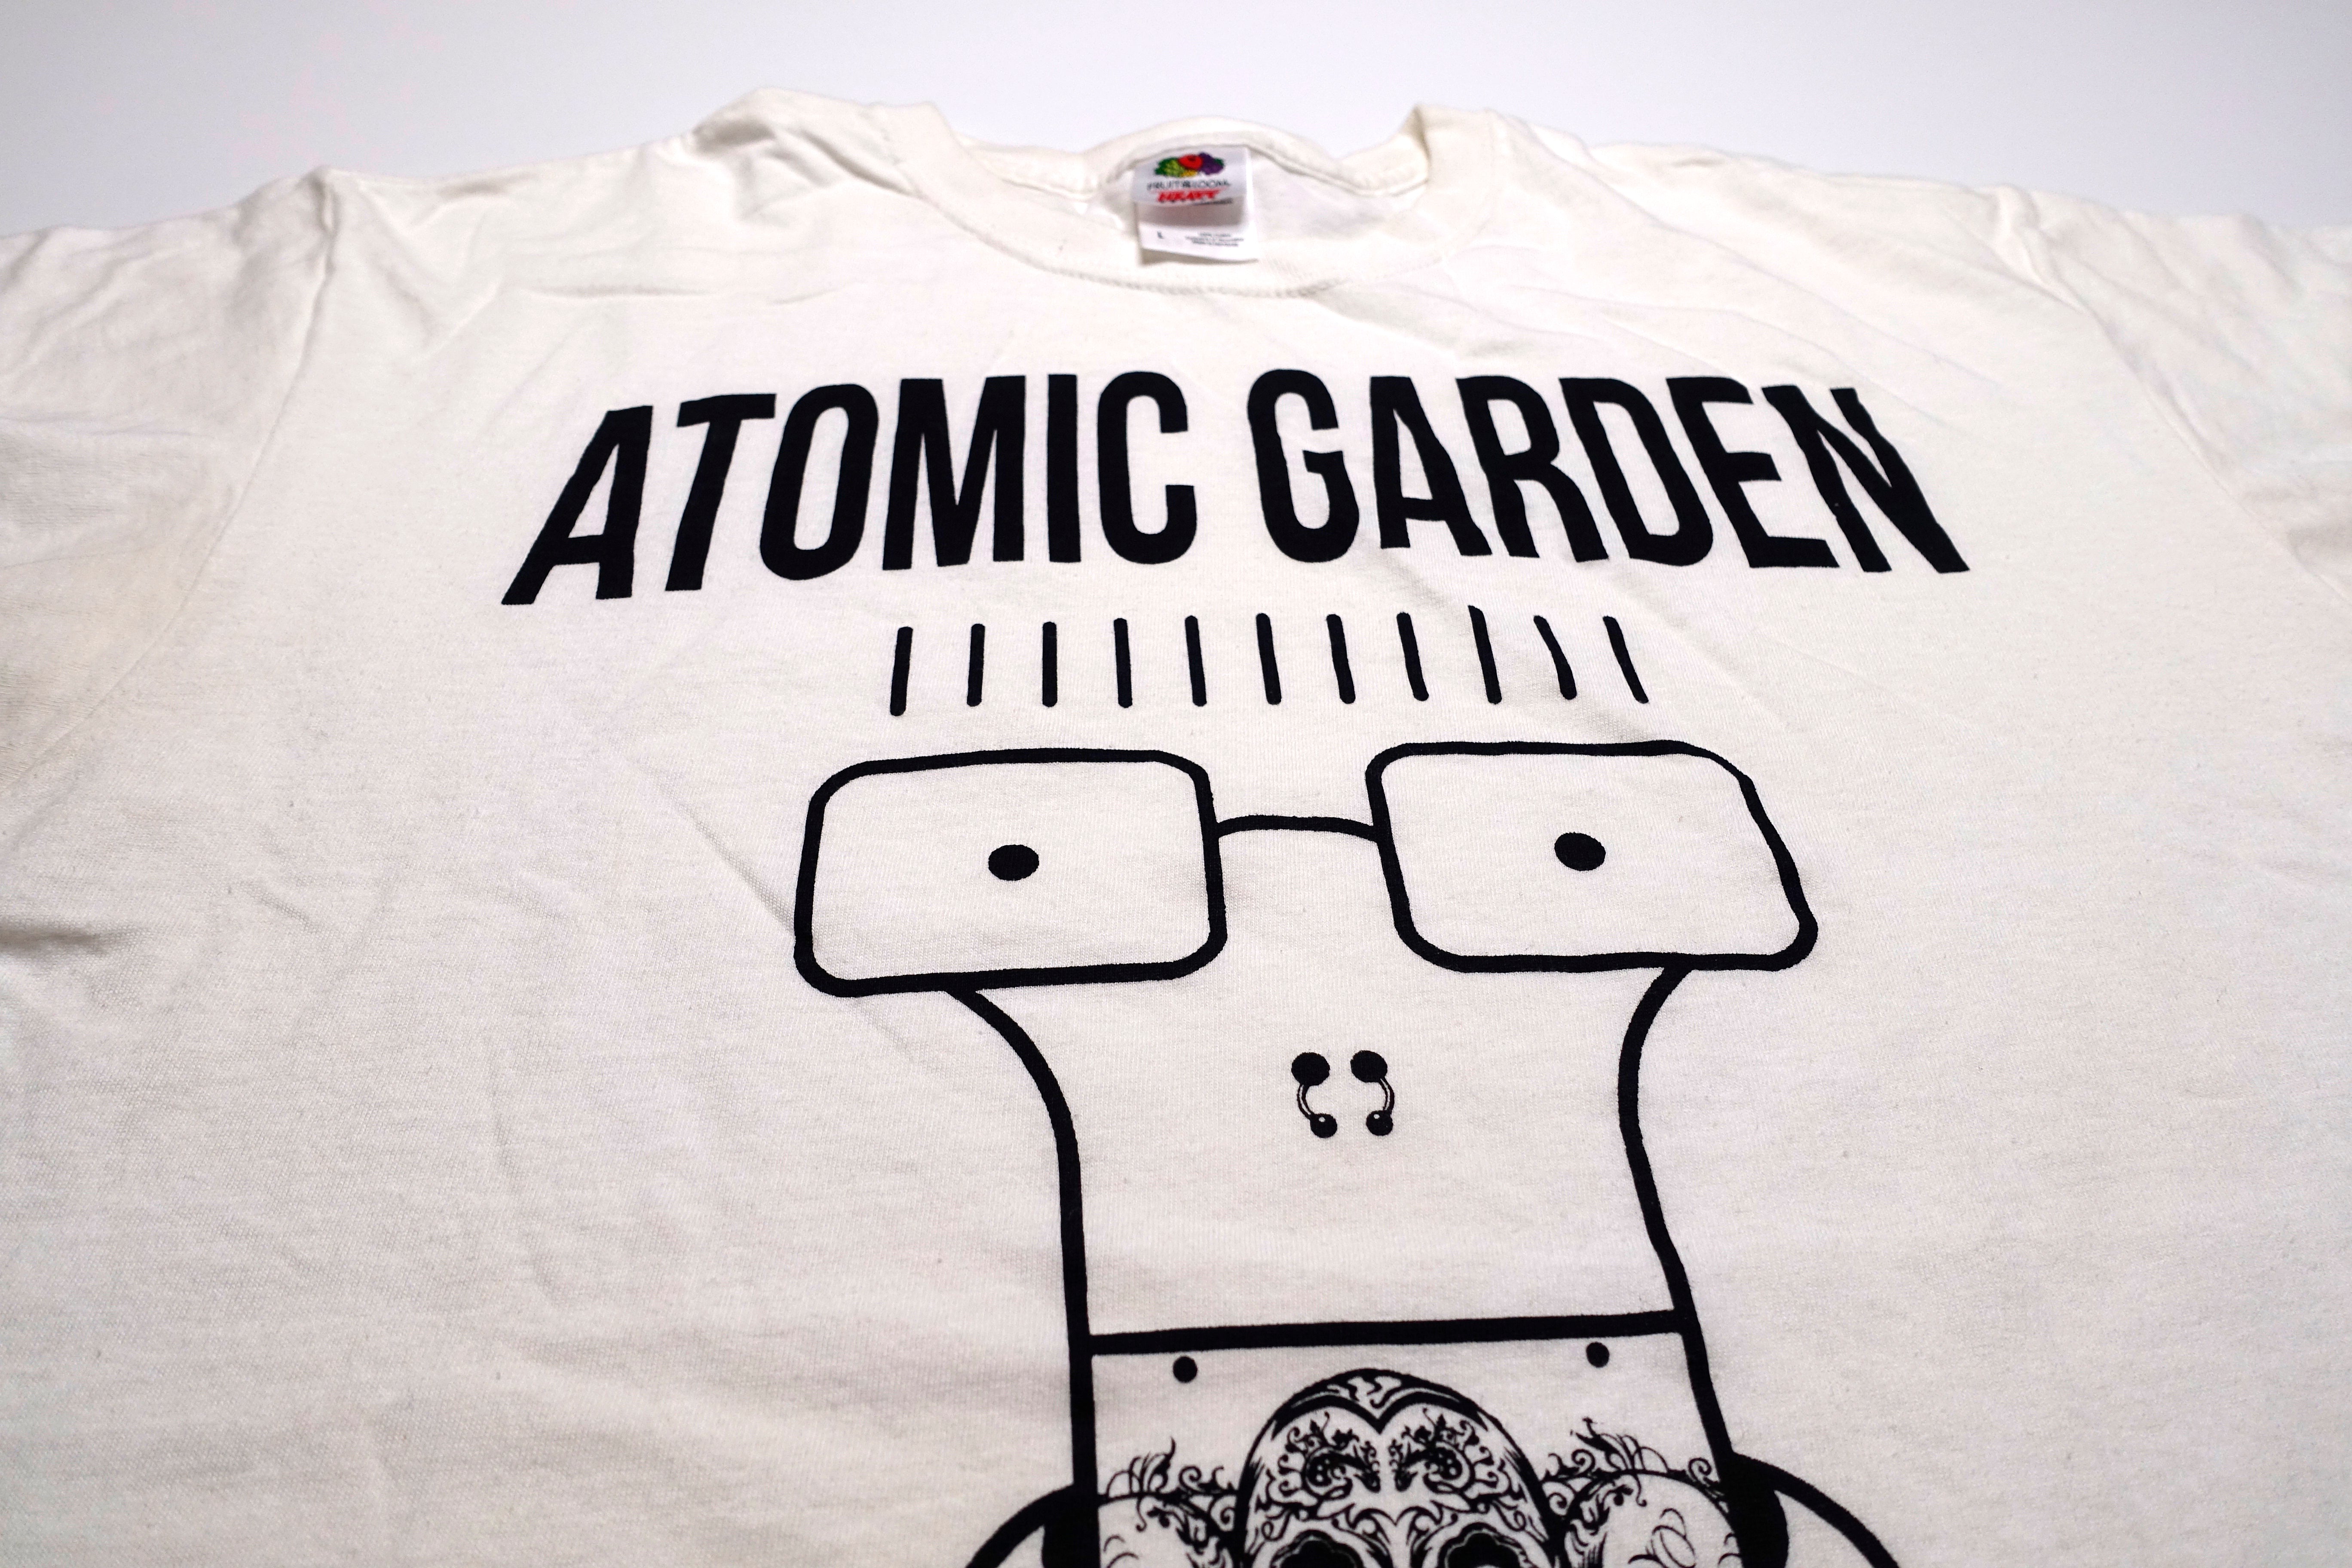 Atomic Garden - (Some Tattoo / Piercing Shop in Milano) Shirt Size Large